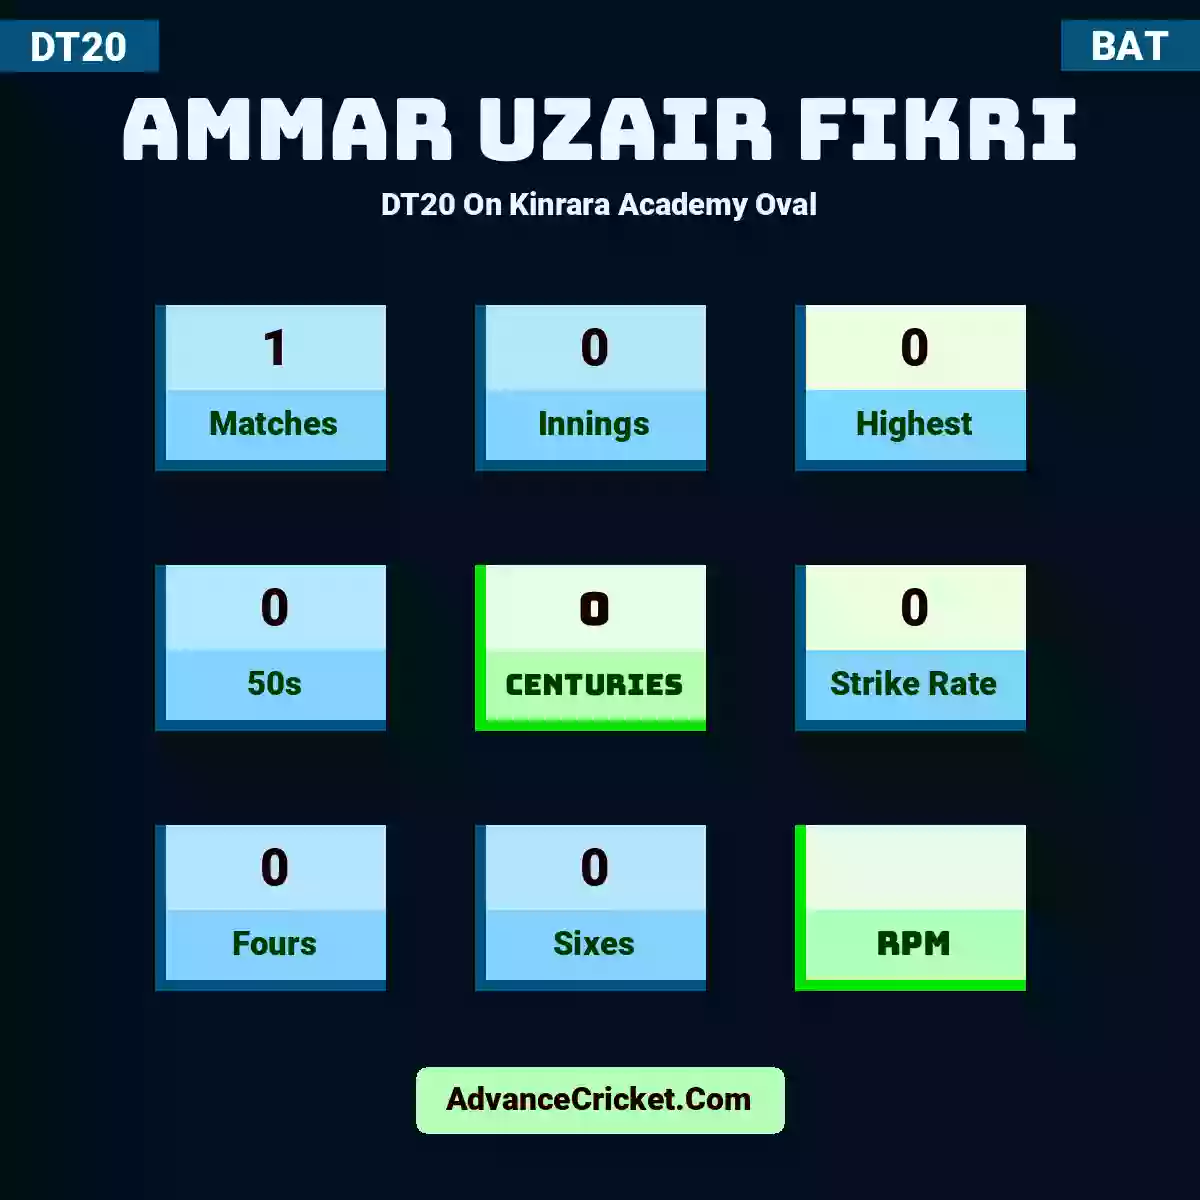 Ammar Uzair Fikri DT20  On Kinrara Academy Oval, Ammar Uzair Fikri played 1 matches, scored 0 runs as highest, 0 half-centuries, and 0 centuries, with a strike rate of 0. A.Uzair.Fikri hit 0 fours and 0 sixes.